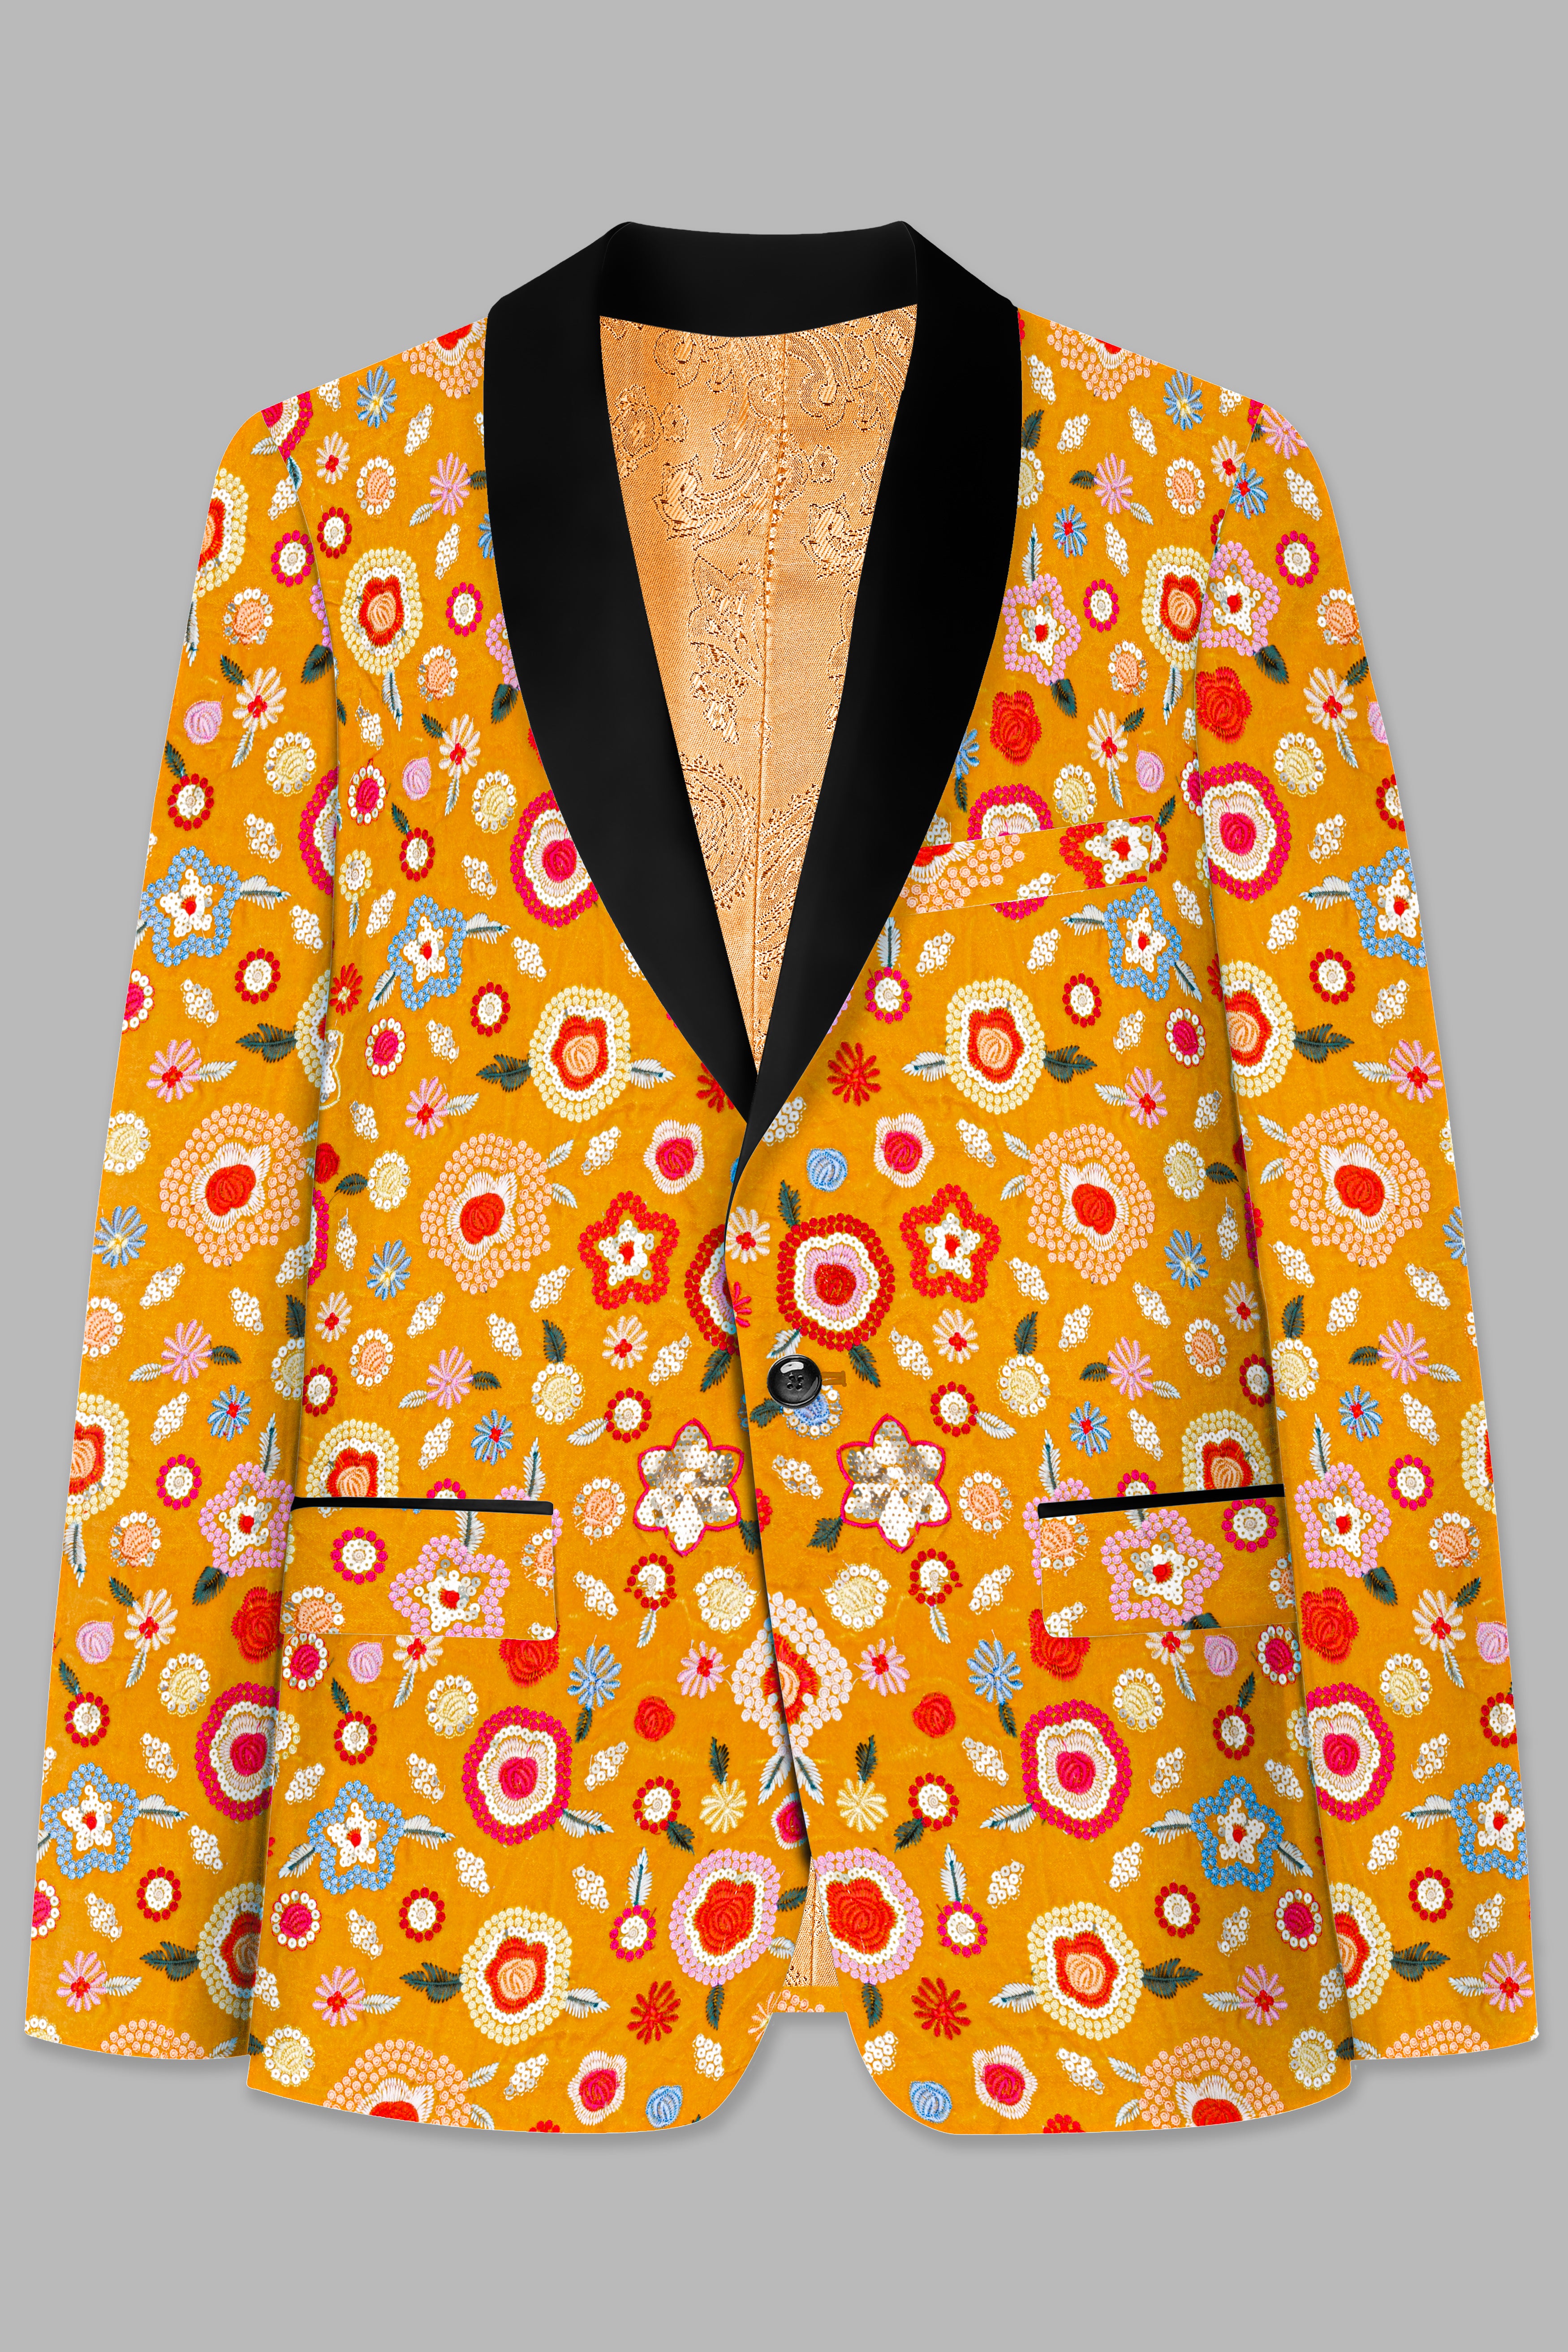 Tangerine Yellow And Alizarin Red Velvet Floral Thread Embroidered Tuxedo Blazer